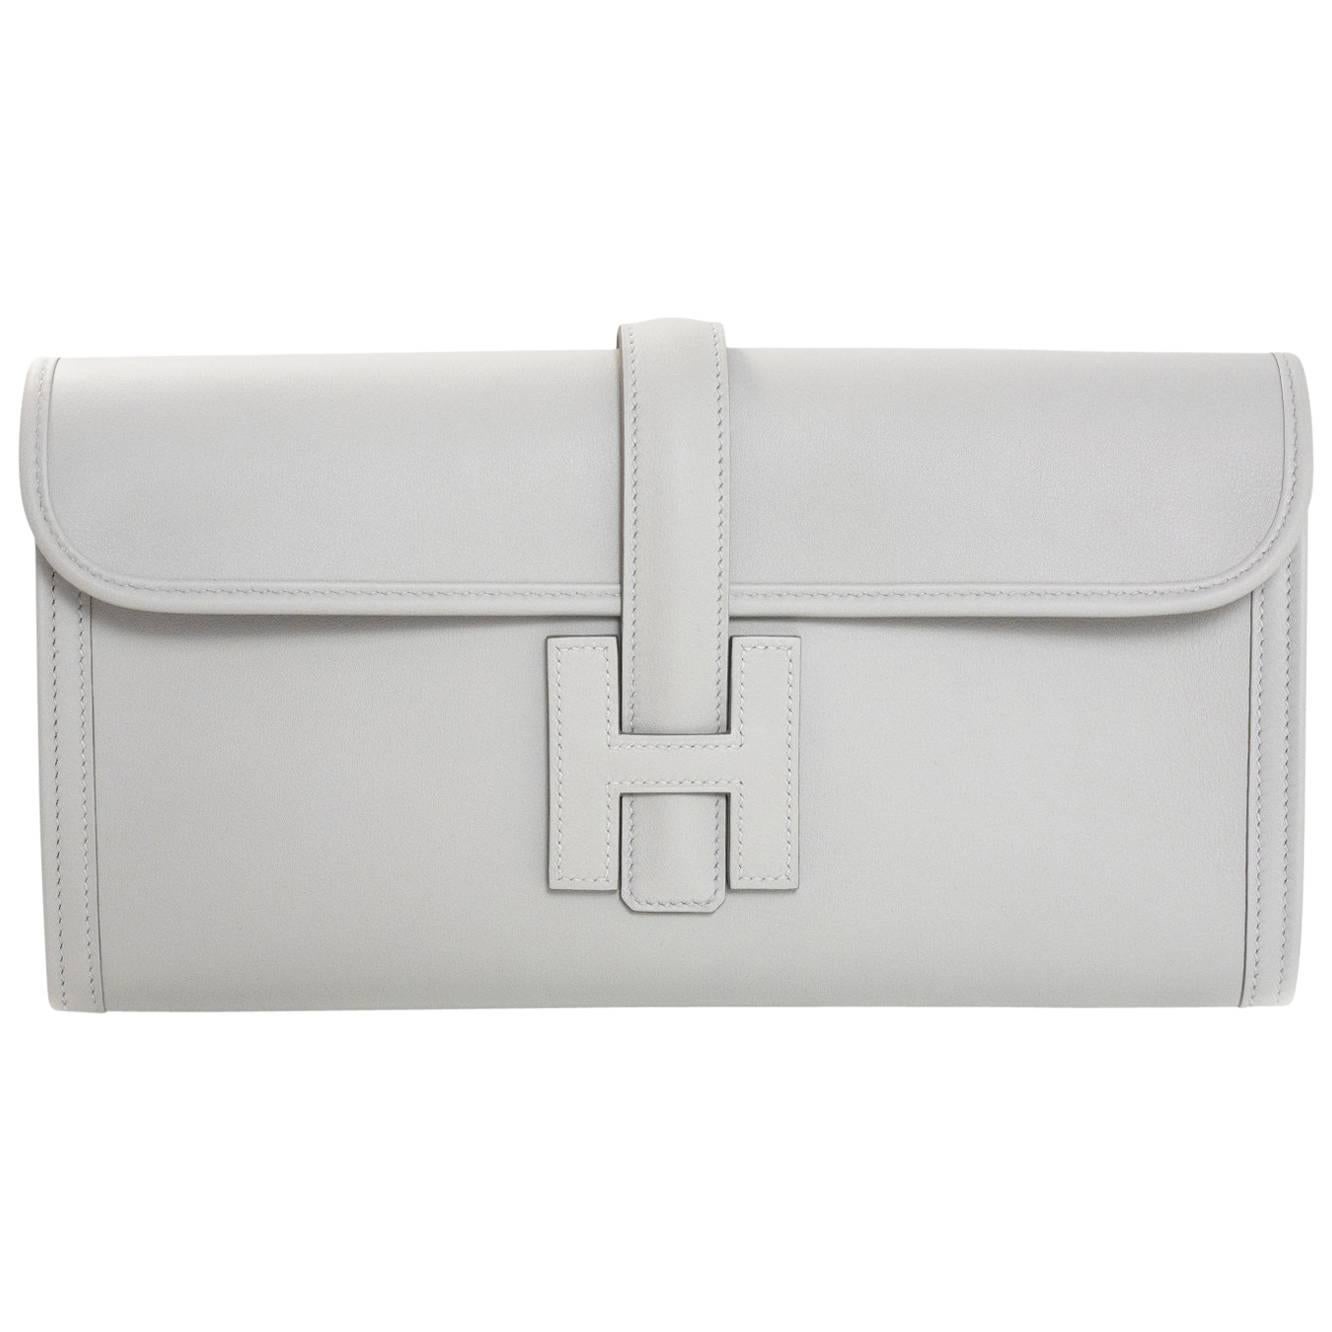 Hermes 2017 Beton Off-White Swift Leather Jige Elan 29cm Clutch Bag